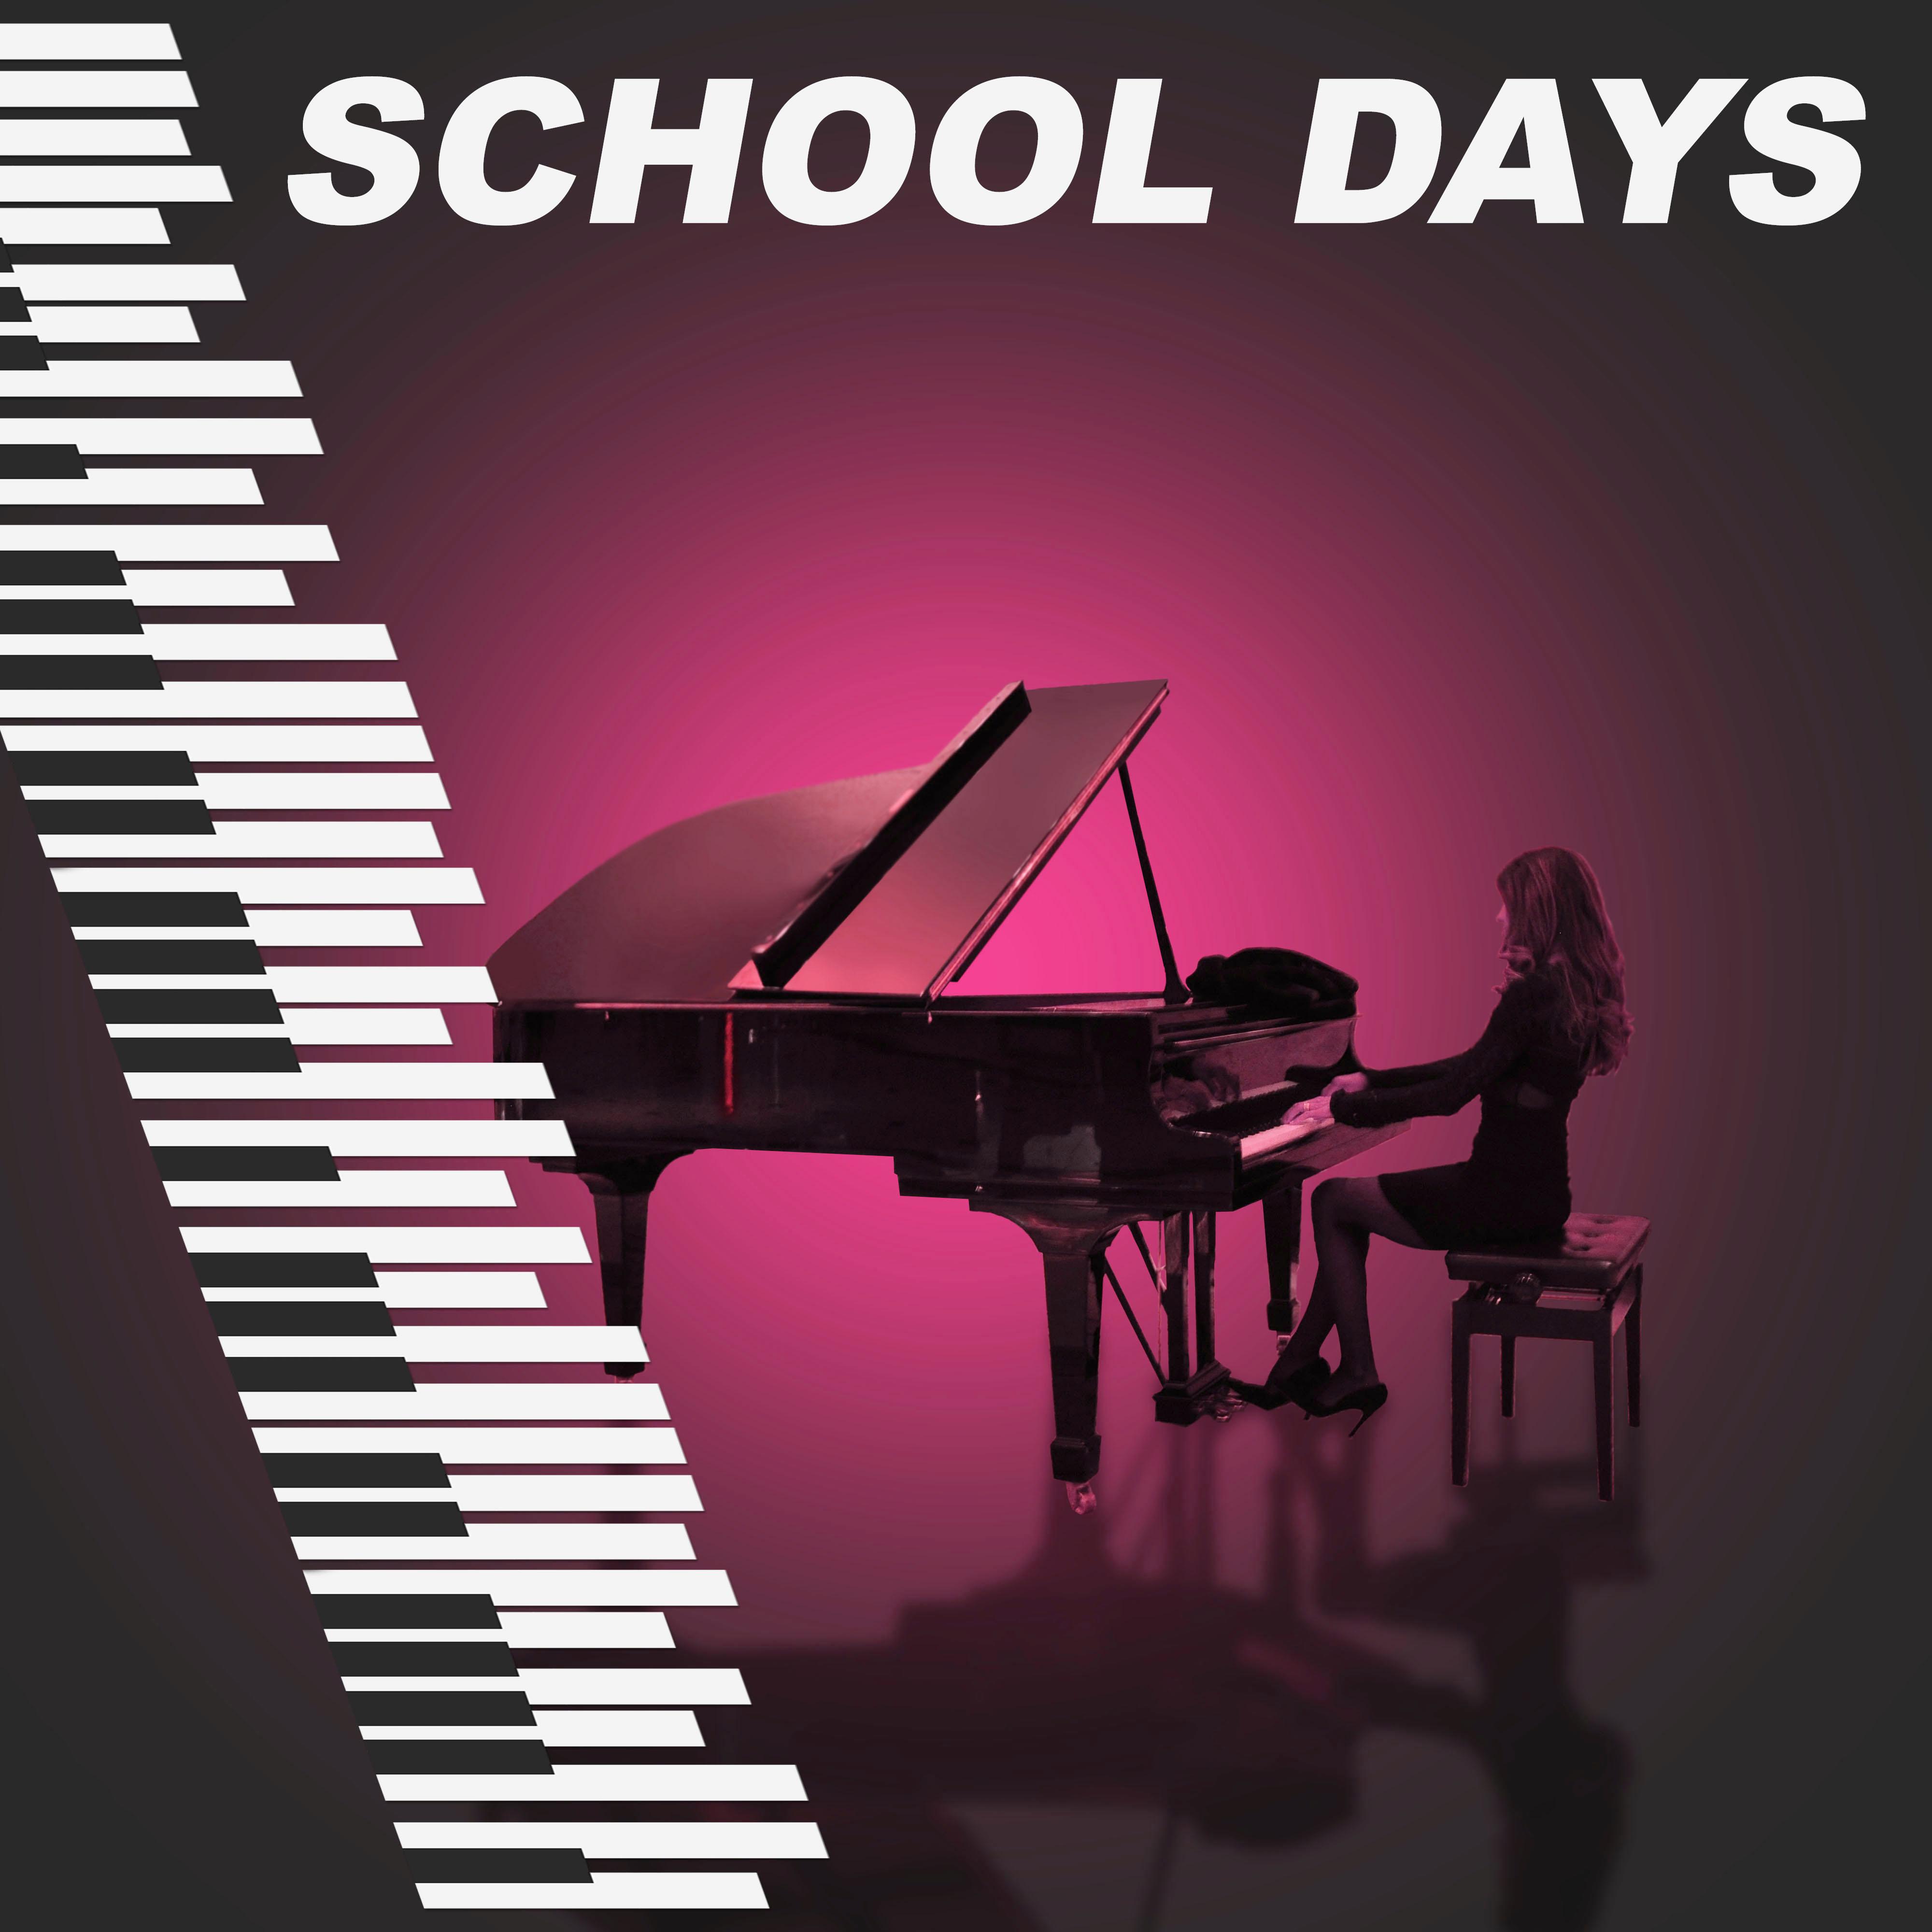 School Days  Piano Jazz, Soft Music, Easy Listening, Focus on Task